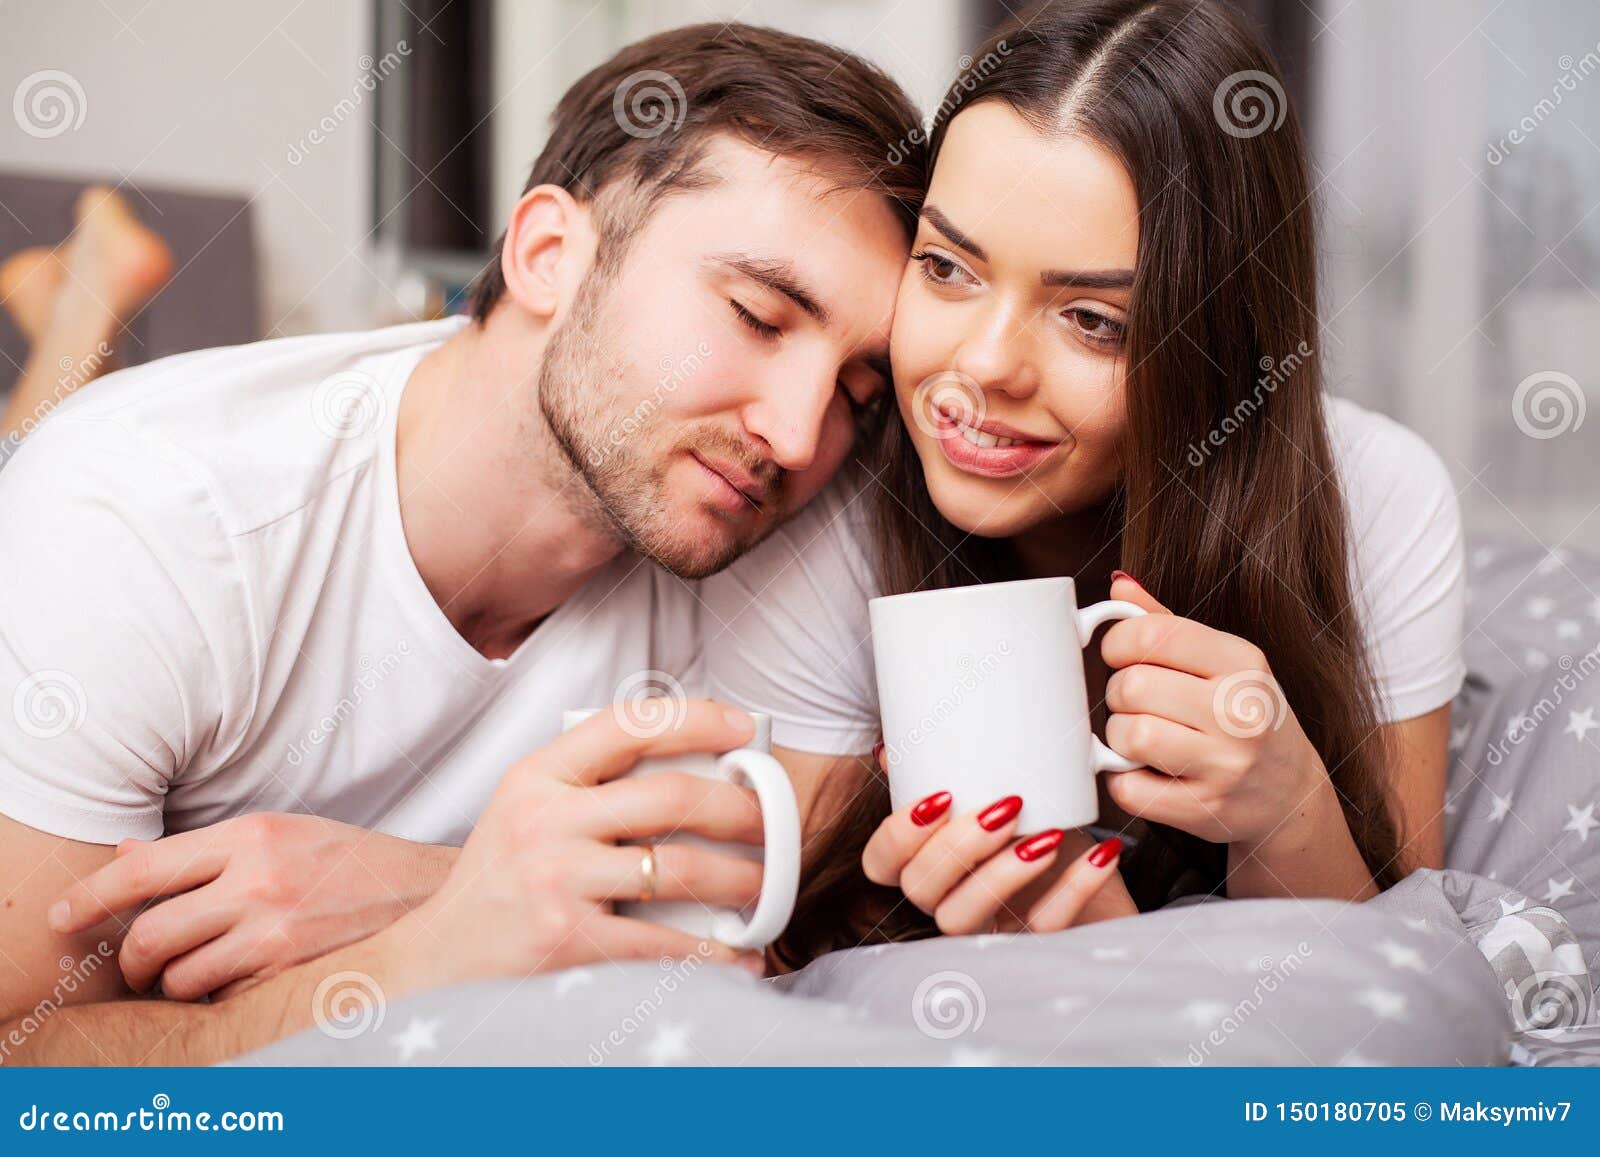 Happy Couple Having Fun In BedYoung Couple In Bedroom Enjoying Each